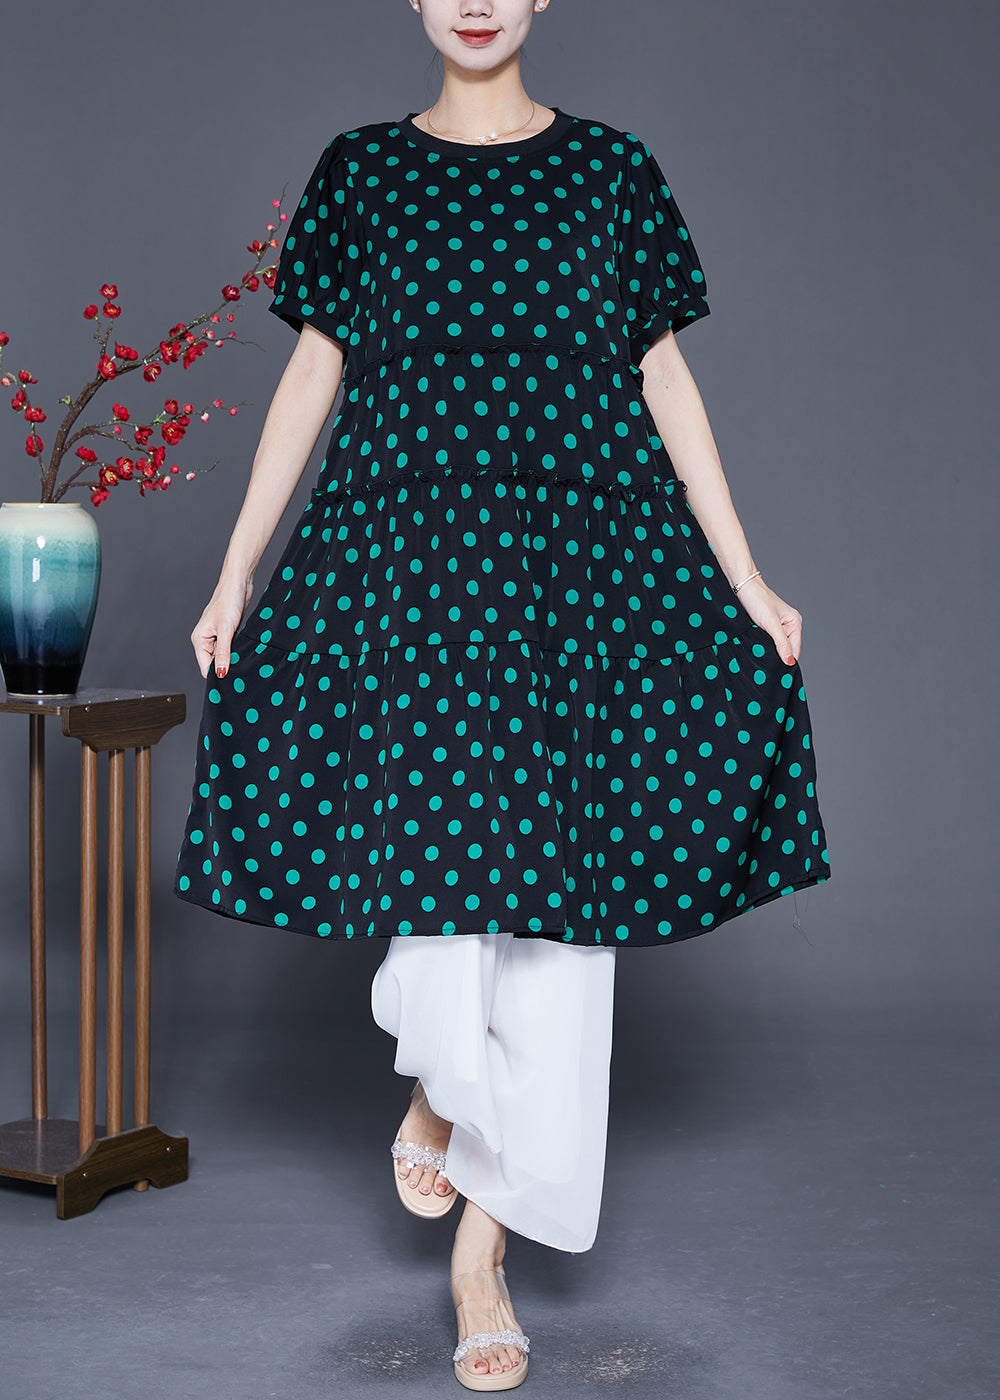 Art Black Ruffled Patchwork Circle Print Chiffon Holiday Dresses Summer Ada Fashion